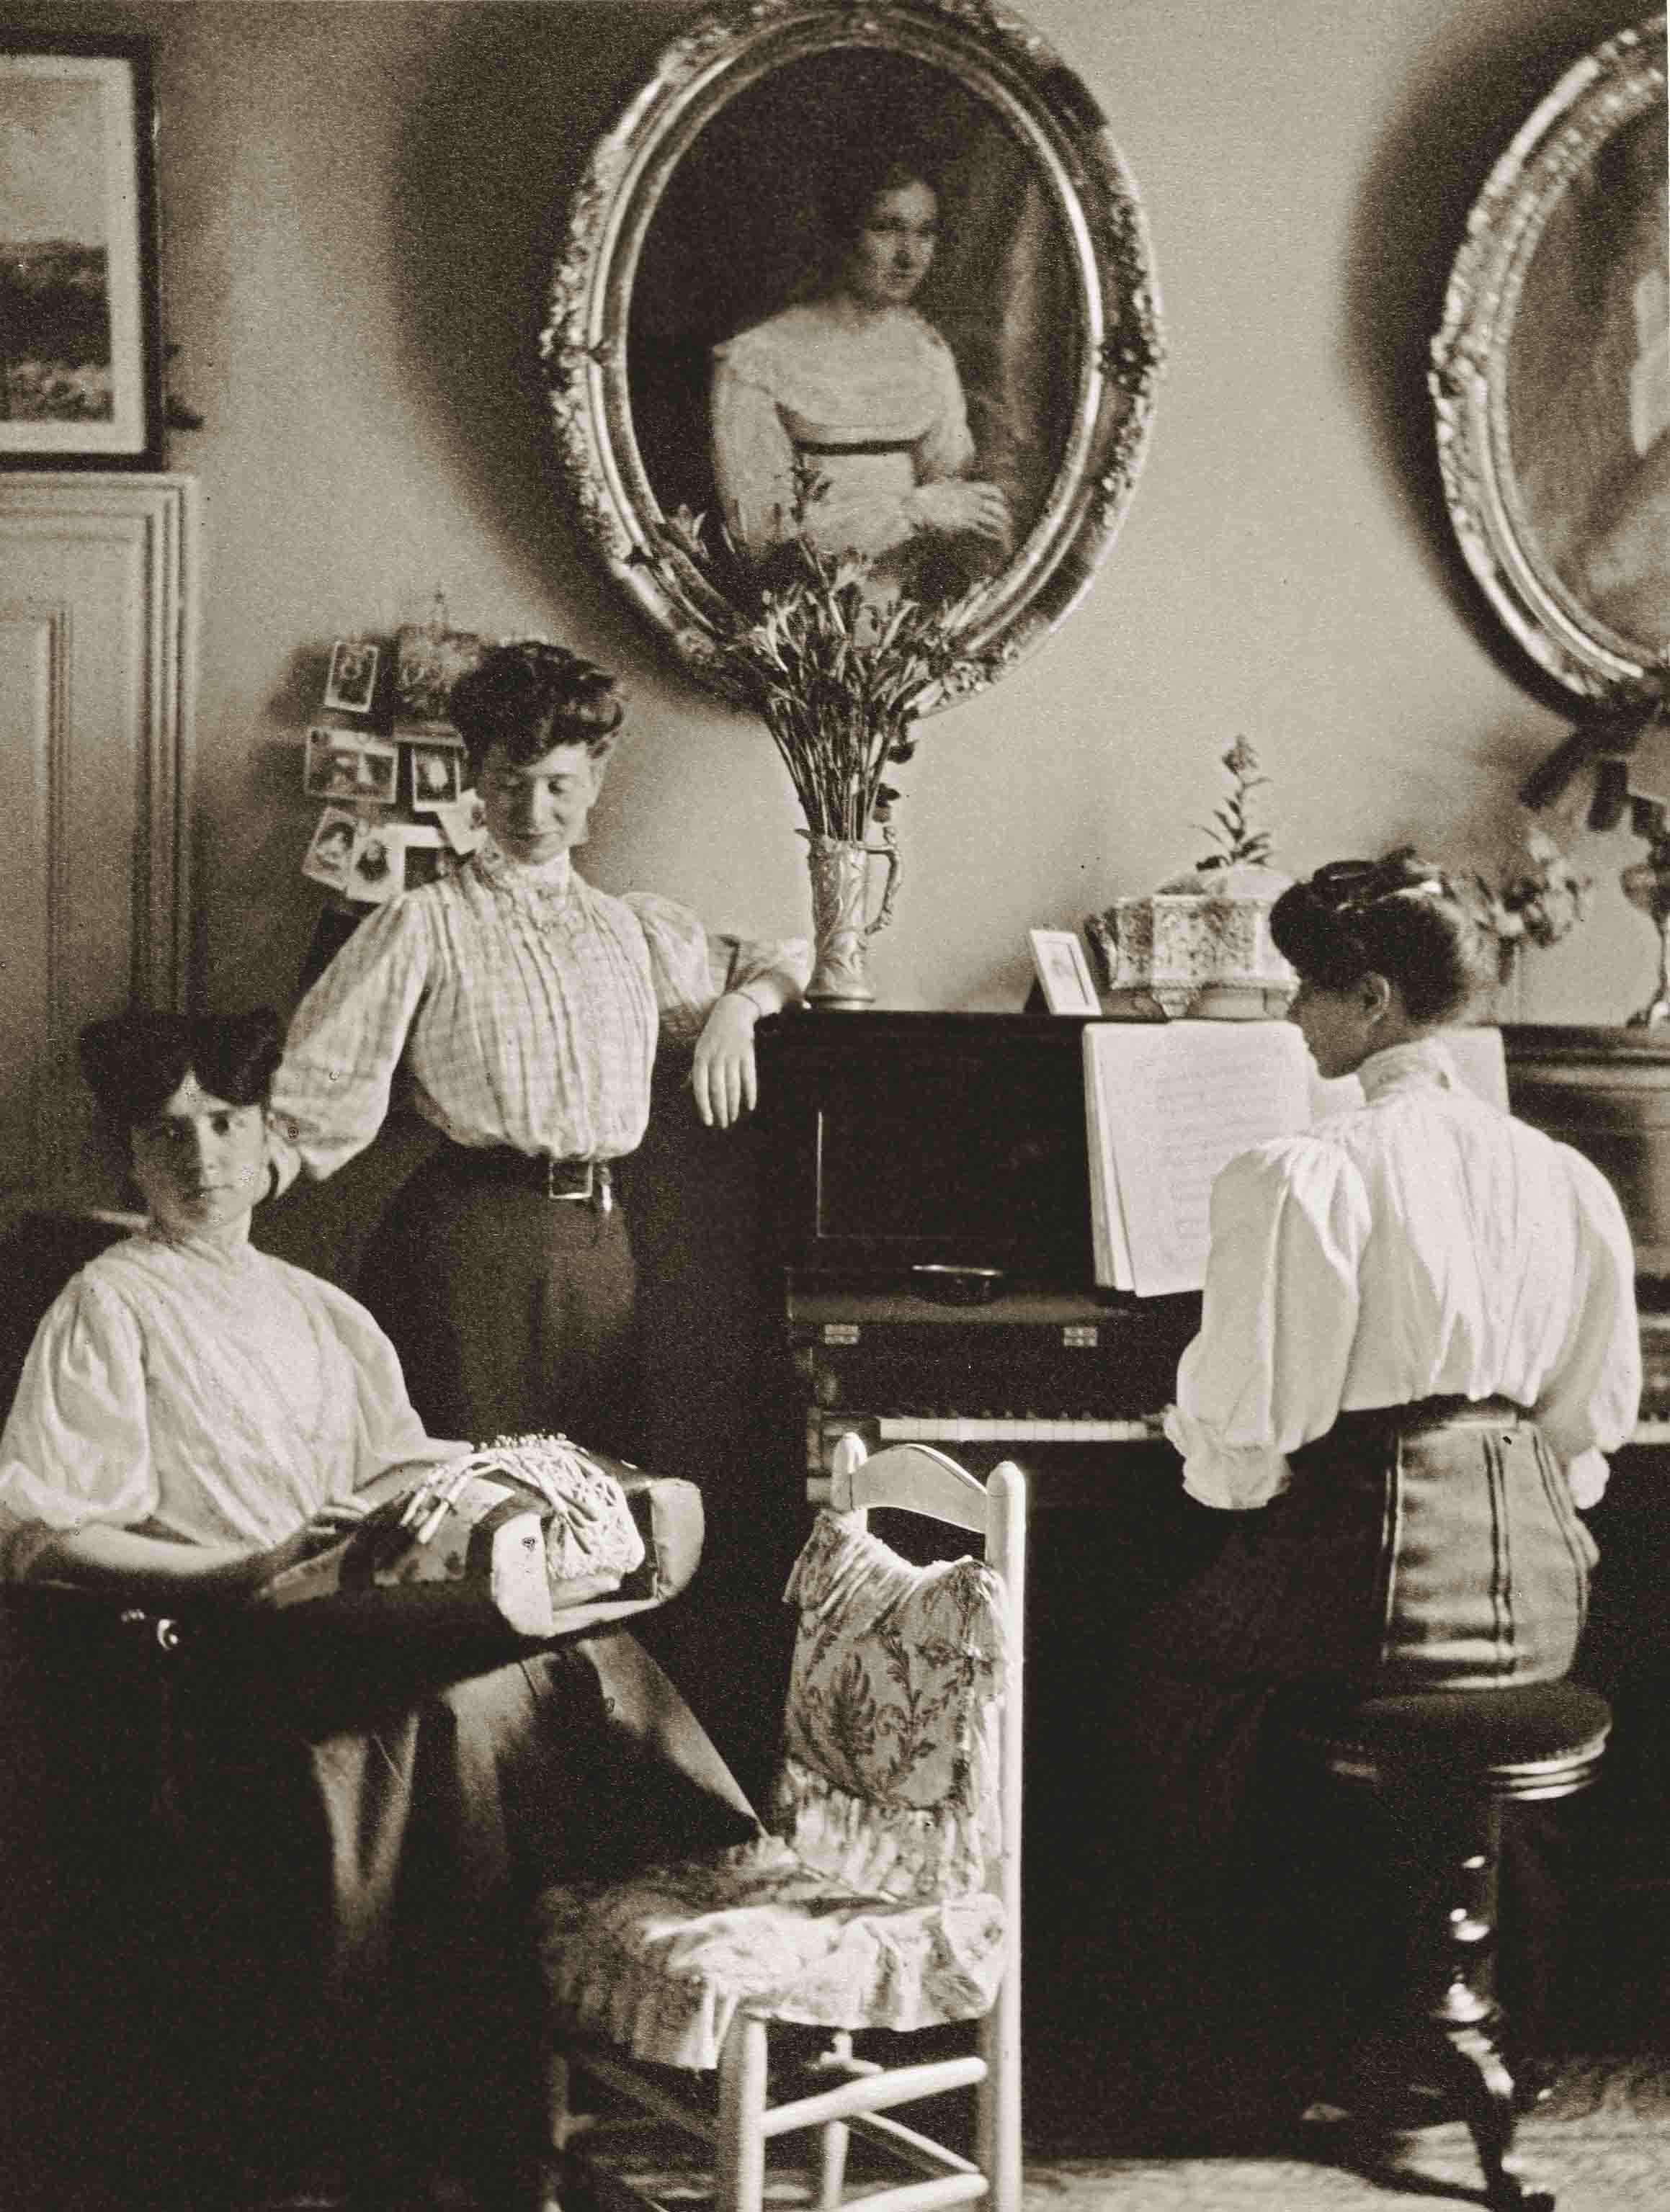 Jeunes filles au piano - Varennes, Fougerolles, Indre, 1904 © G. Wolkowitsch